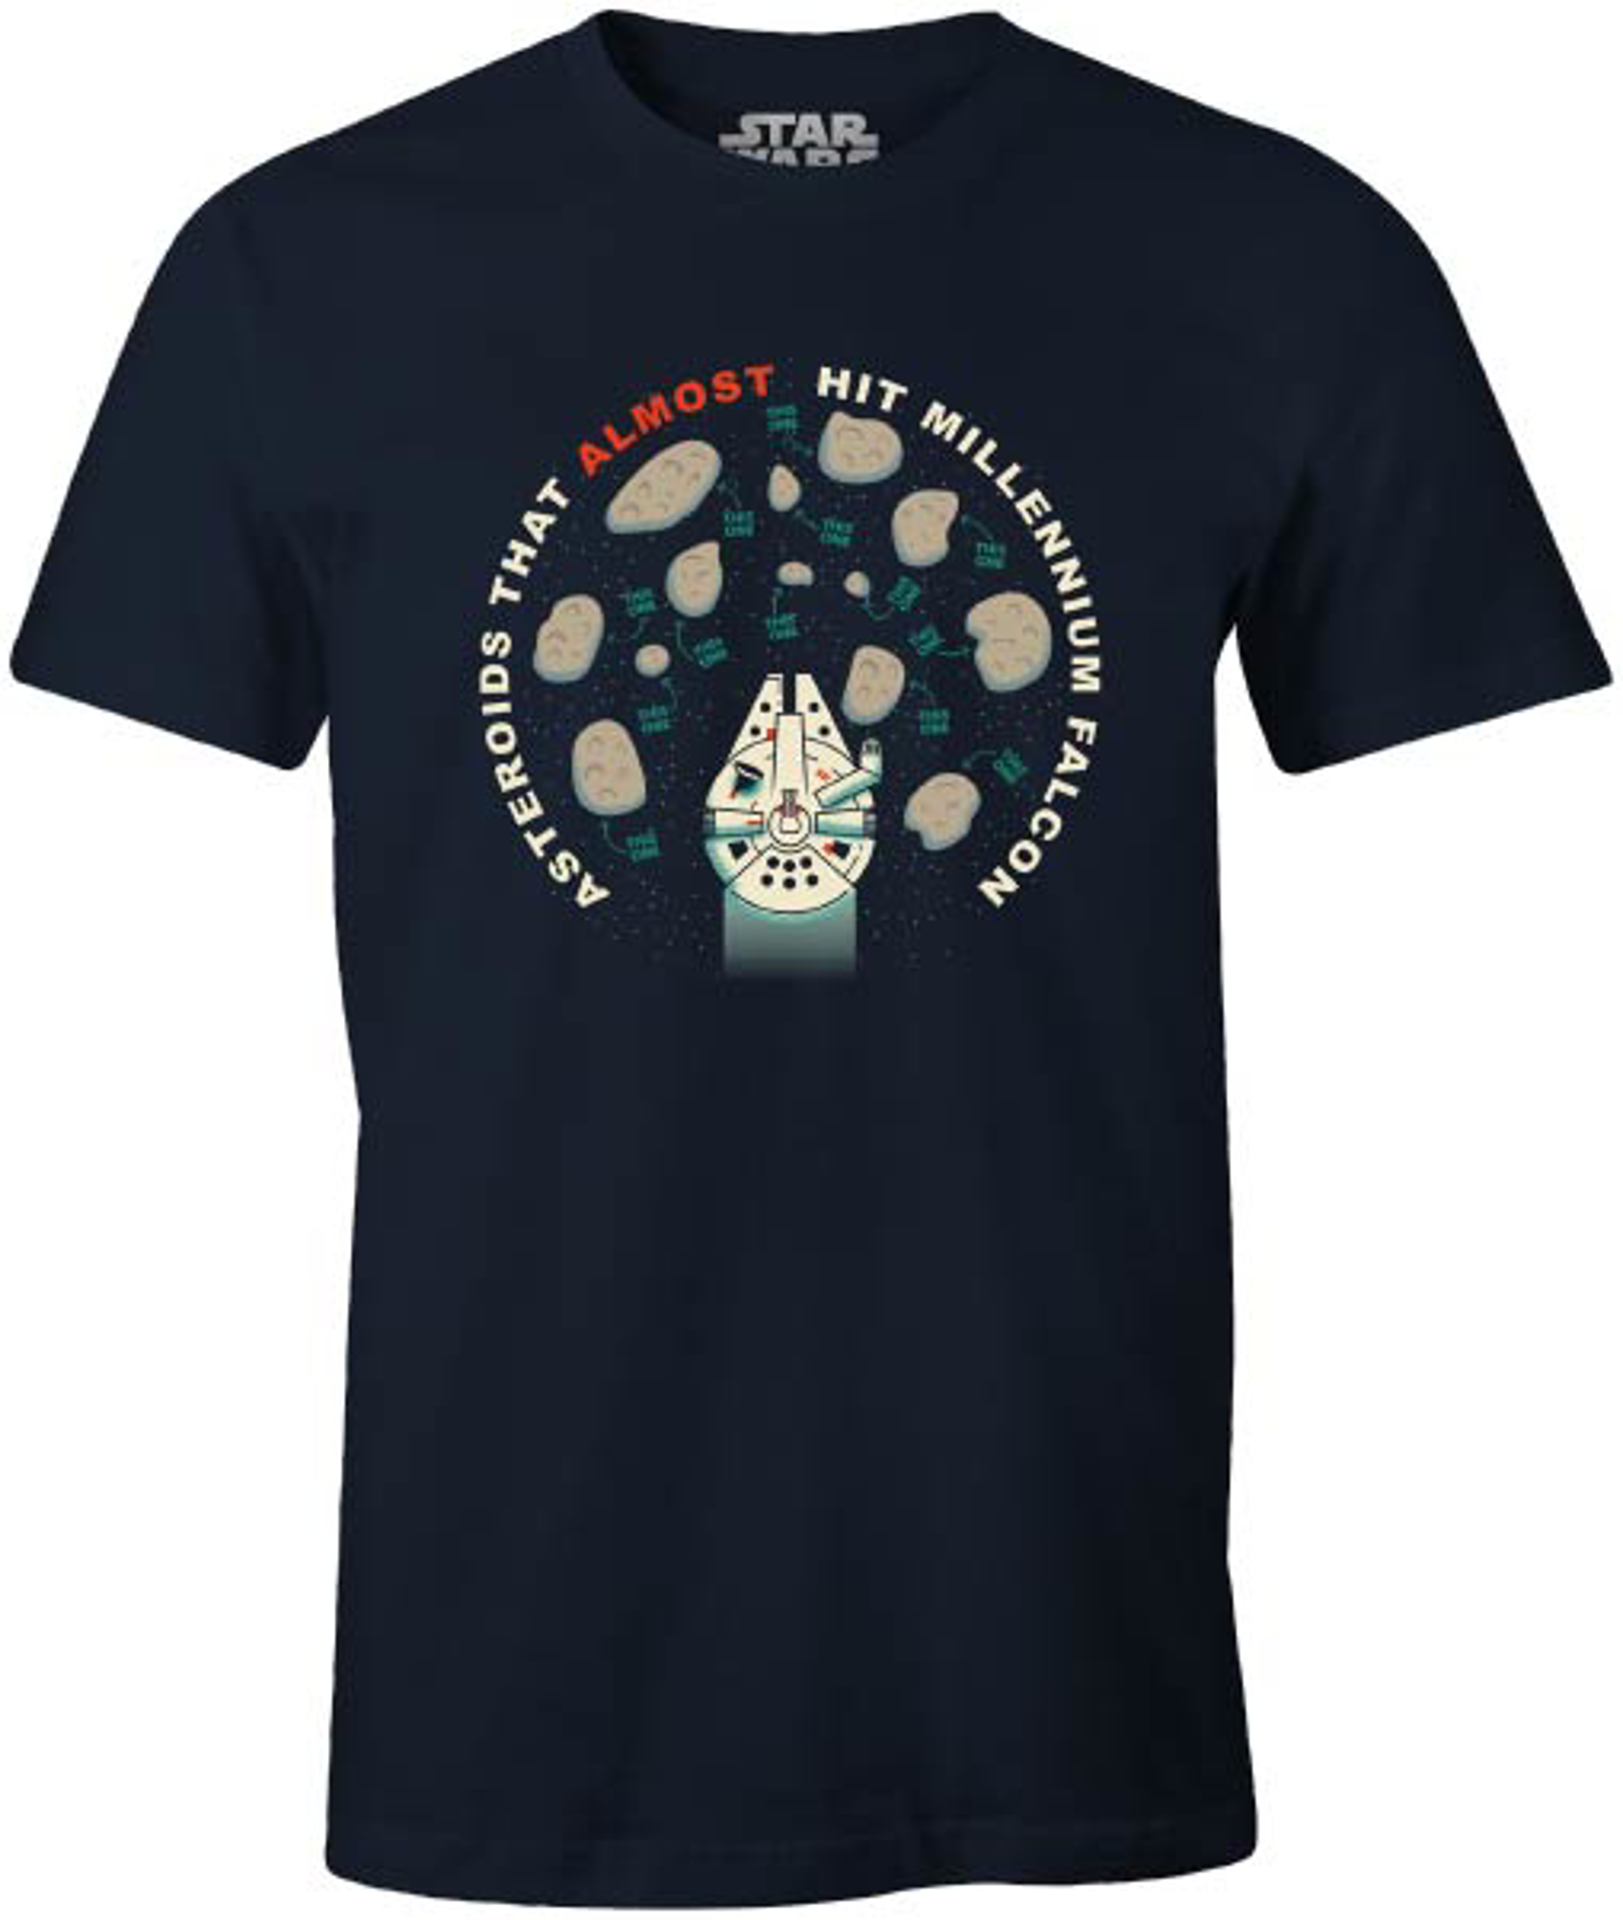 Star Wars  - T-shirt Bleu Marine Hommes - Asteroids that almost hit millenium falcon - L